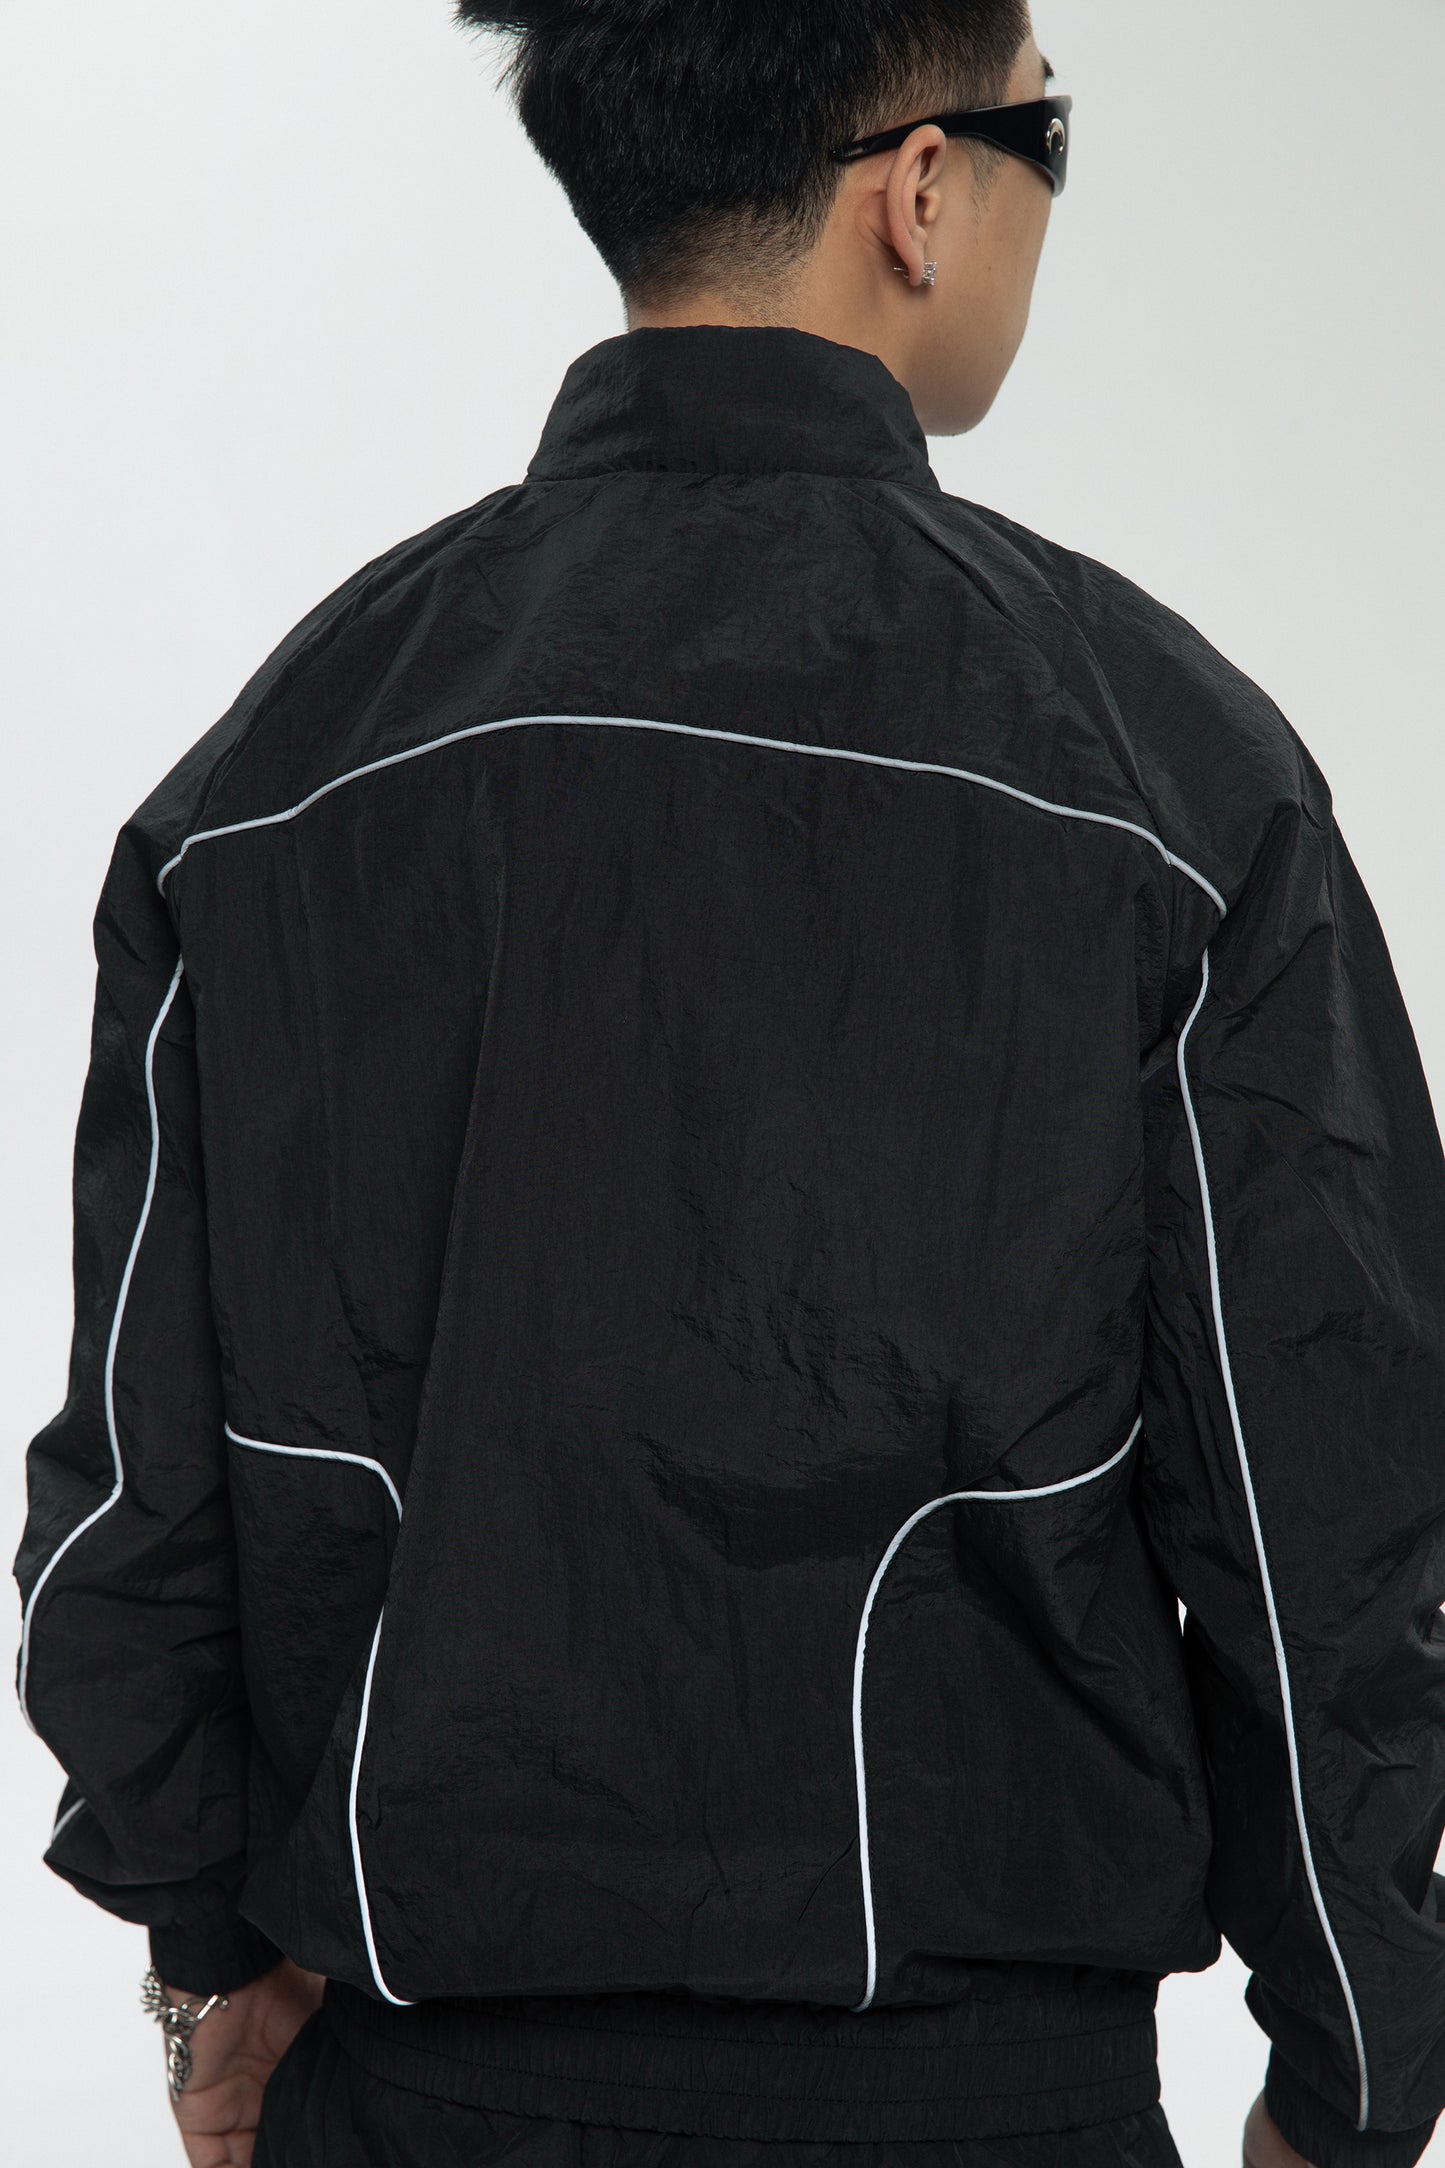 RTVG Double UOGlobe Sport Suit(Jacket+Pants)